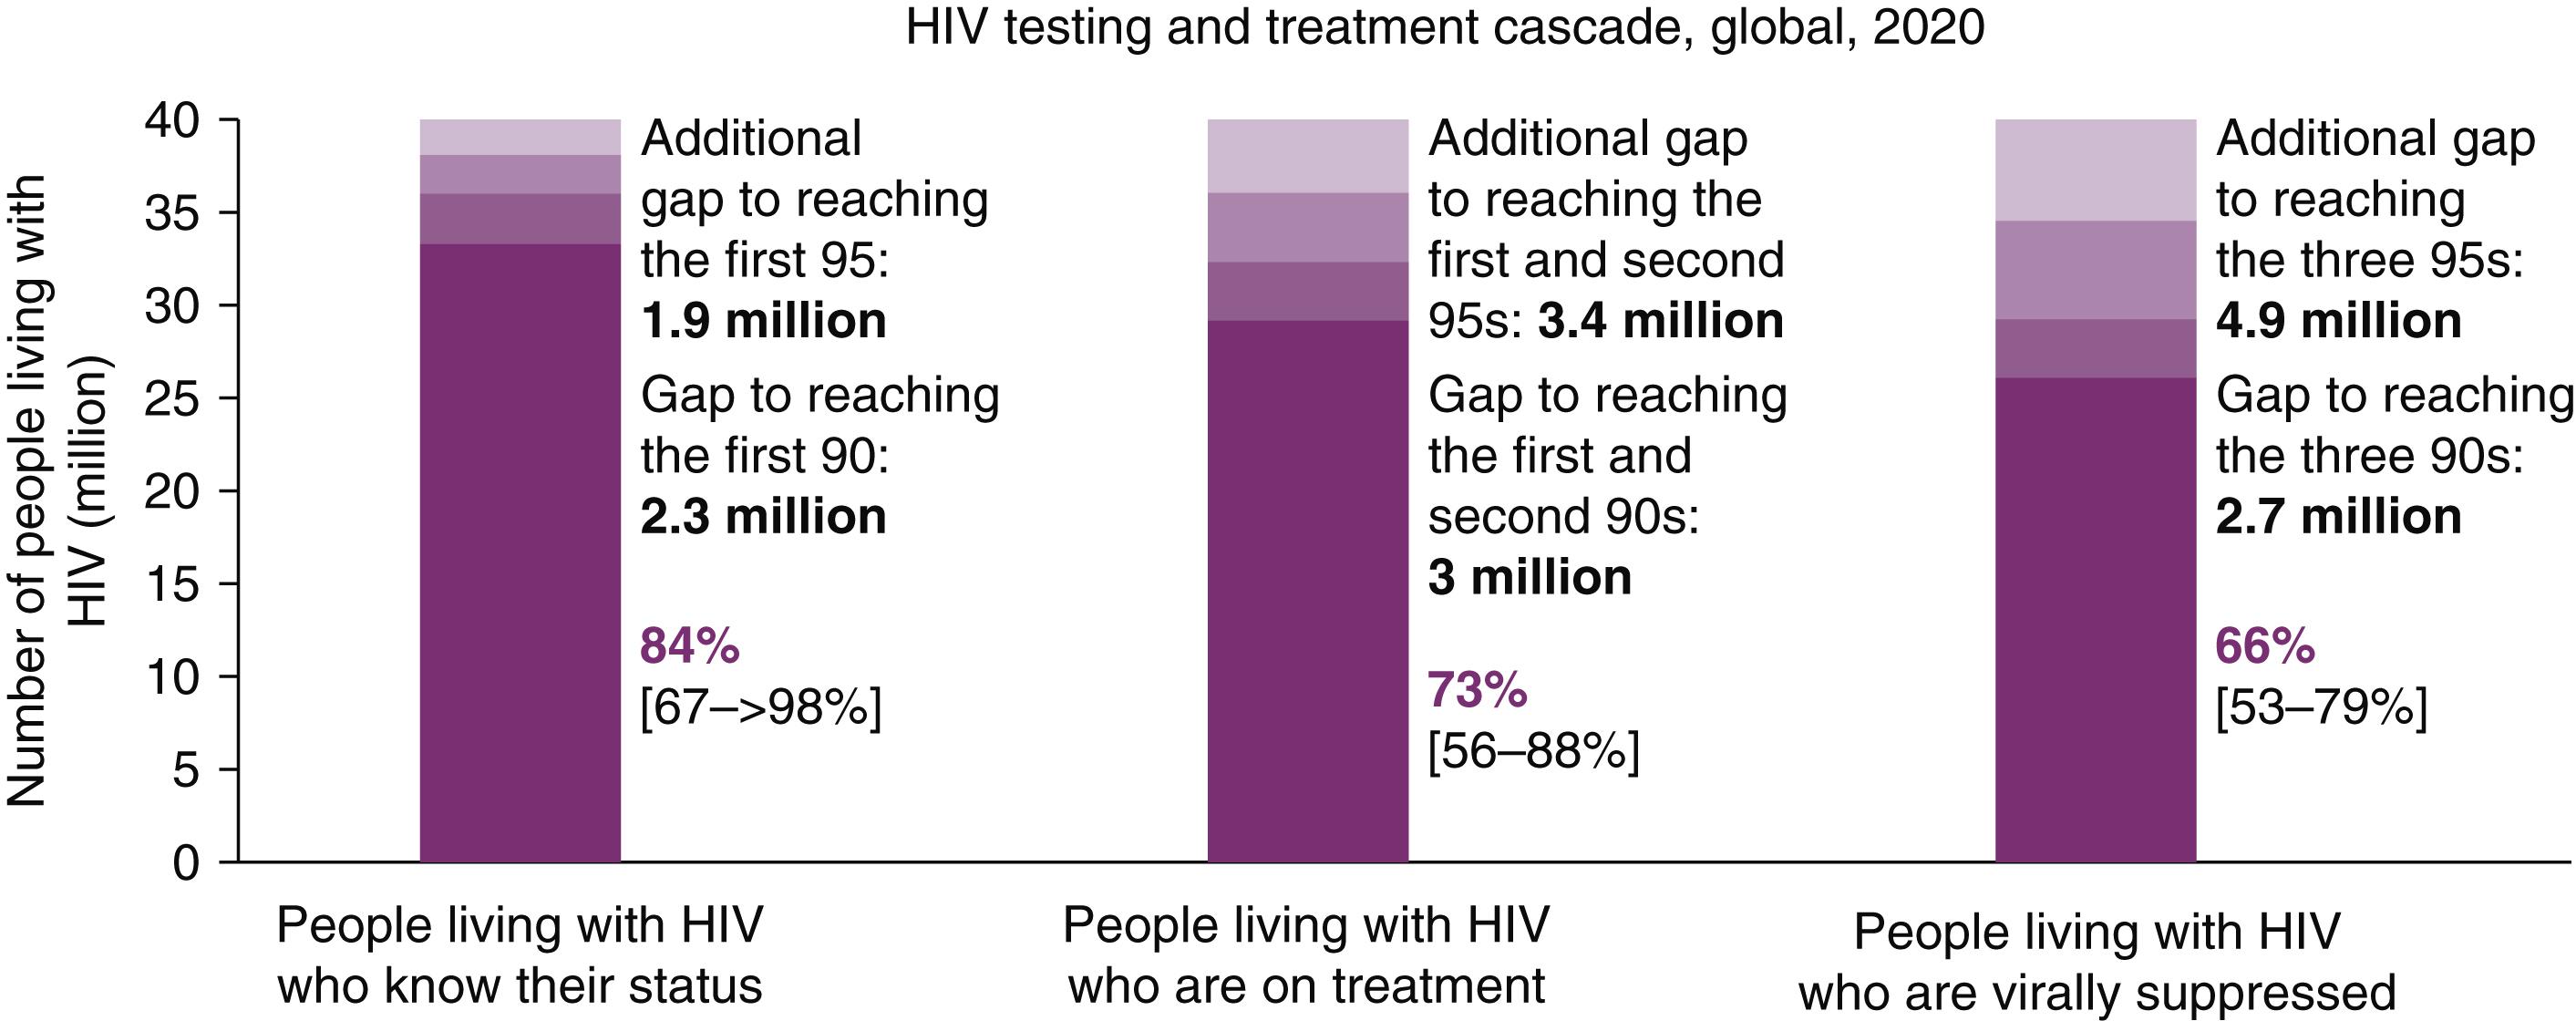 FIGURE 353-2, Global human immunodeficiency virus (HIV) testing and treatment cascade.